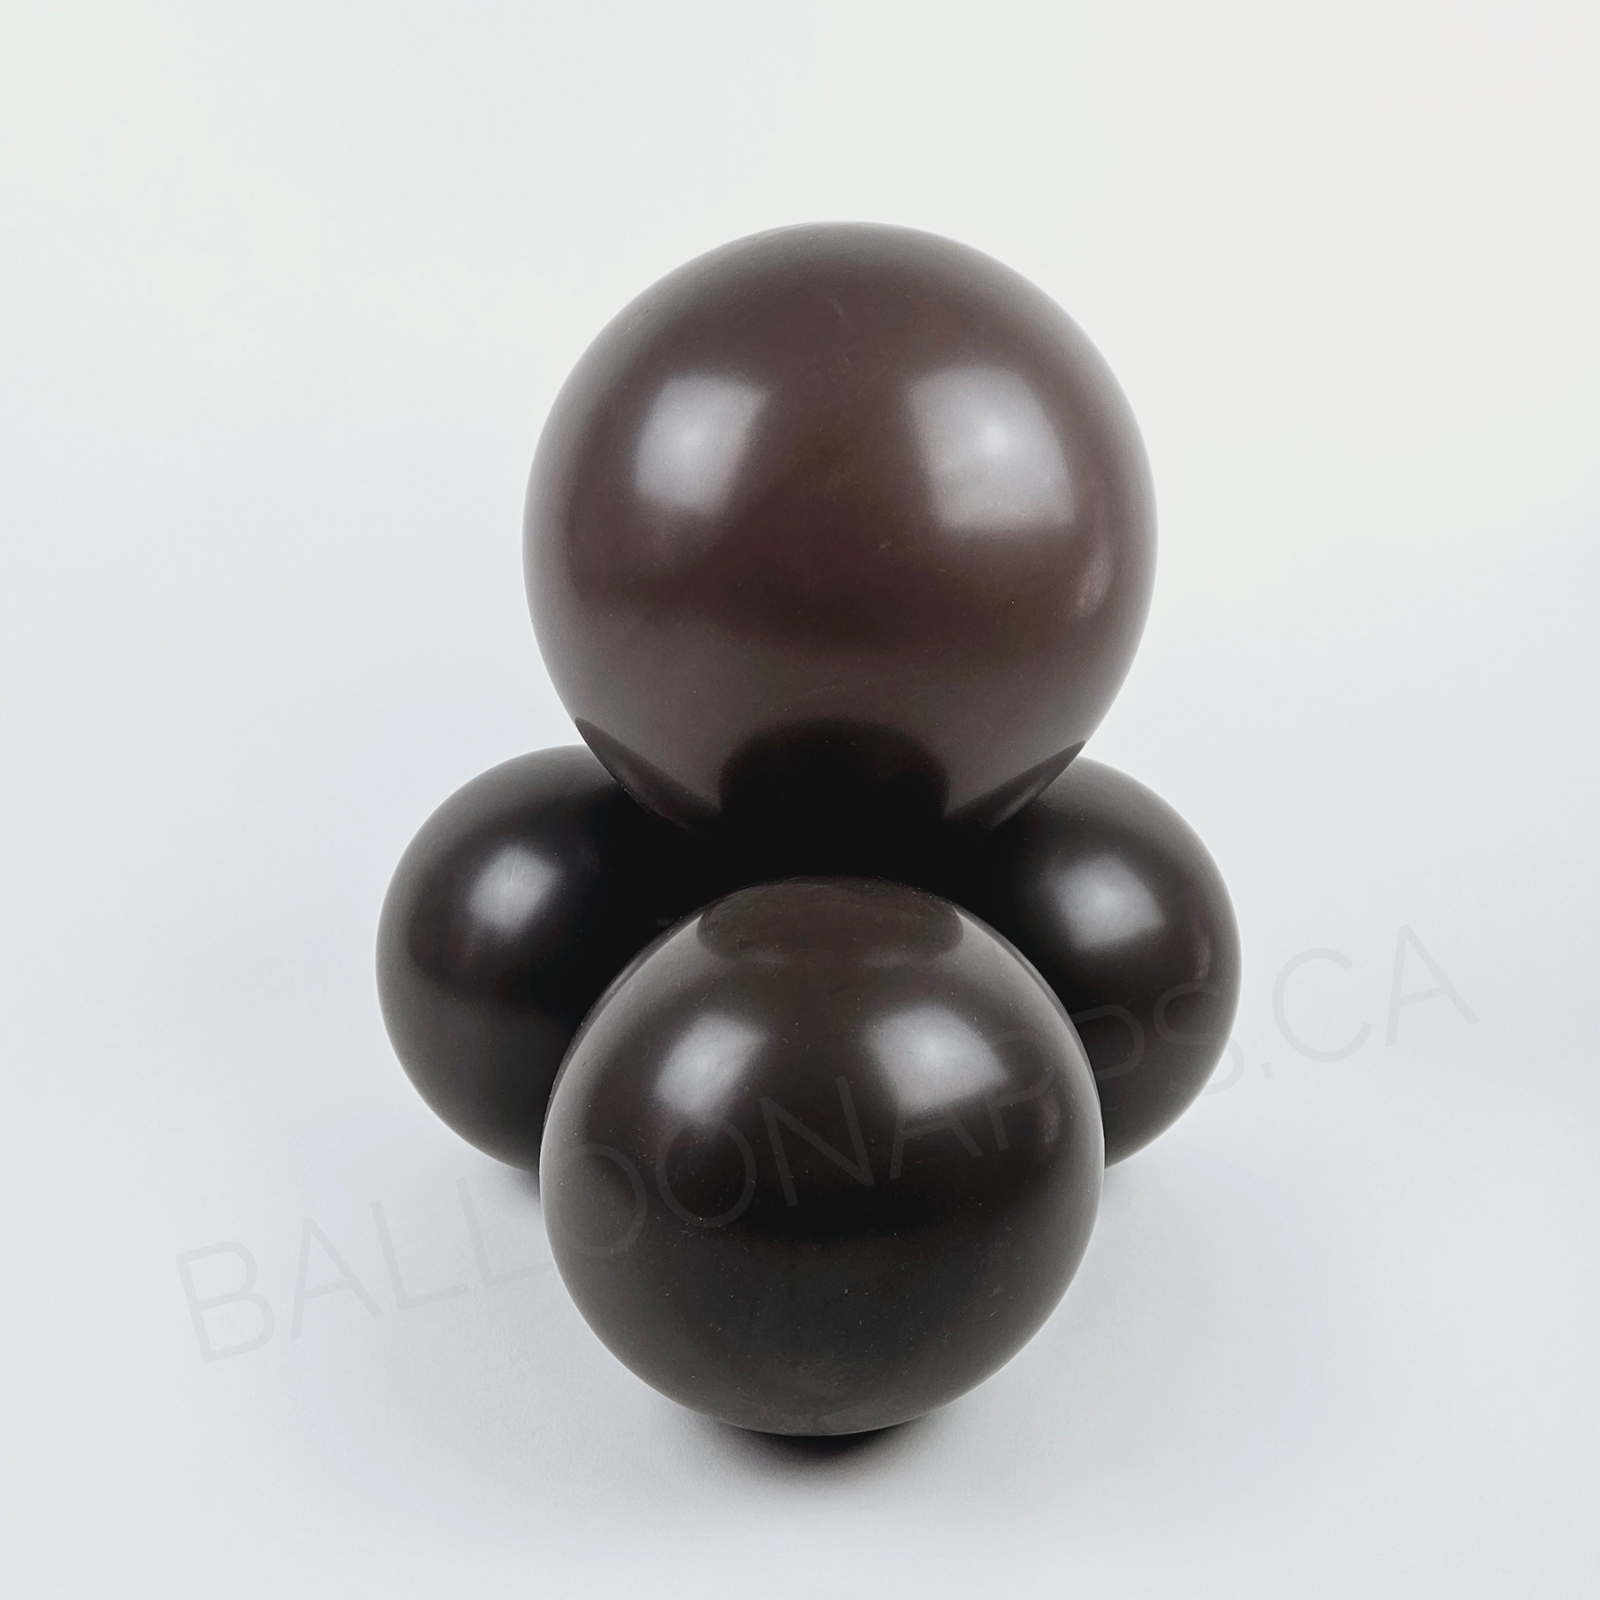 balloon texture BET (50) 260 Deluxe Chocolate balloons